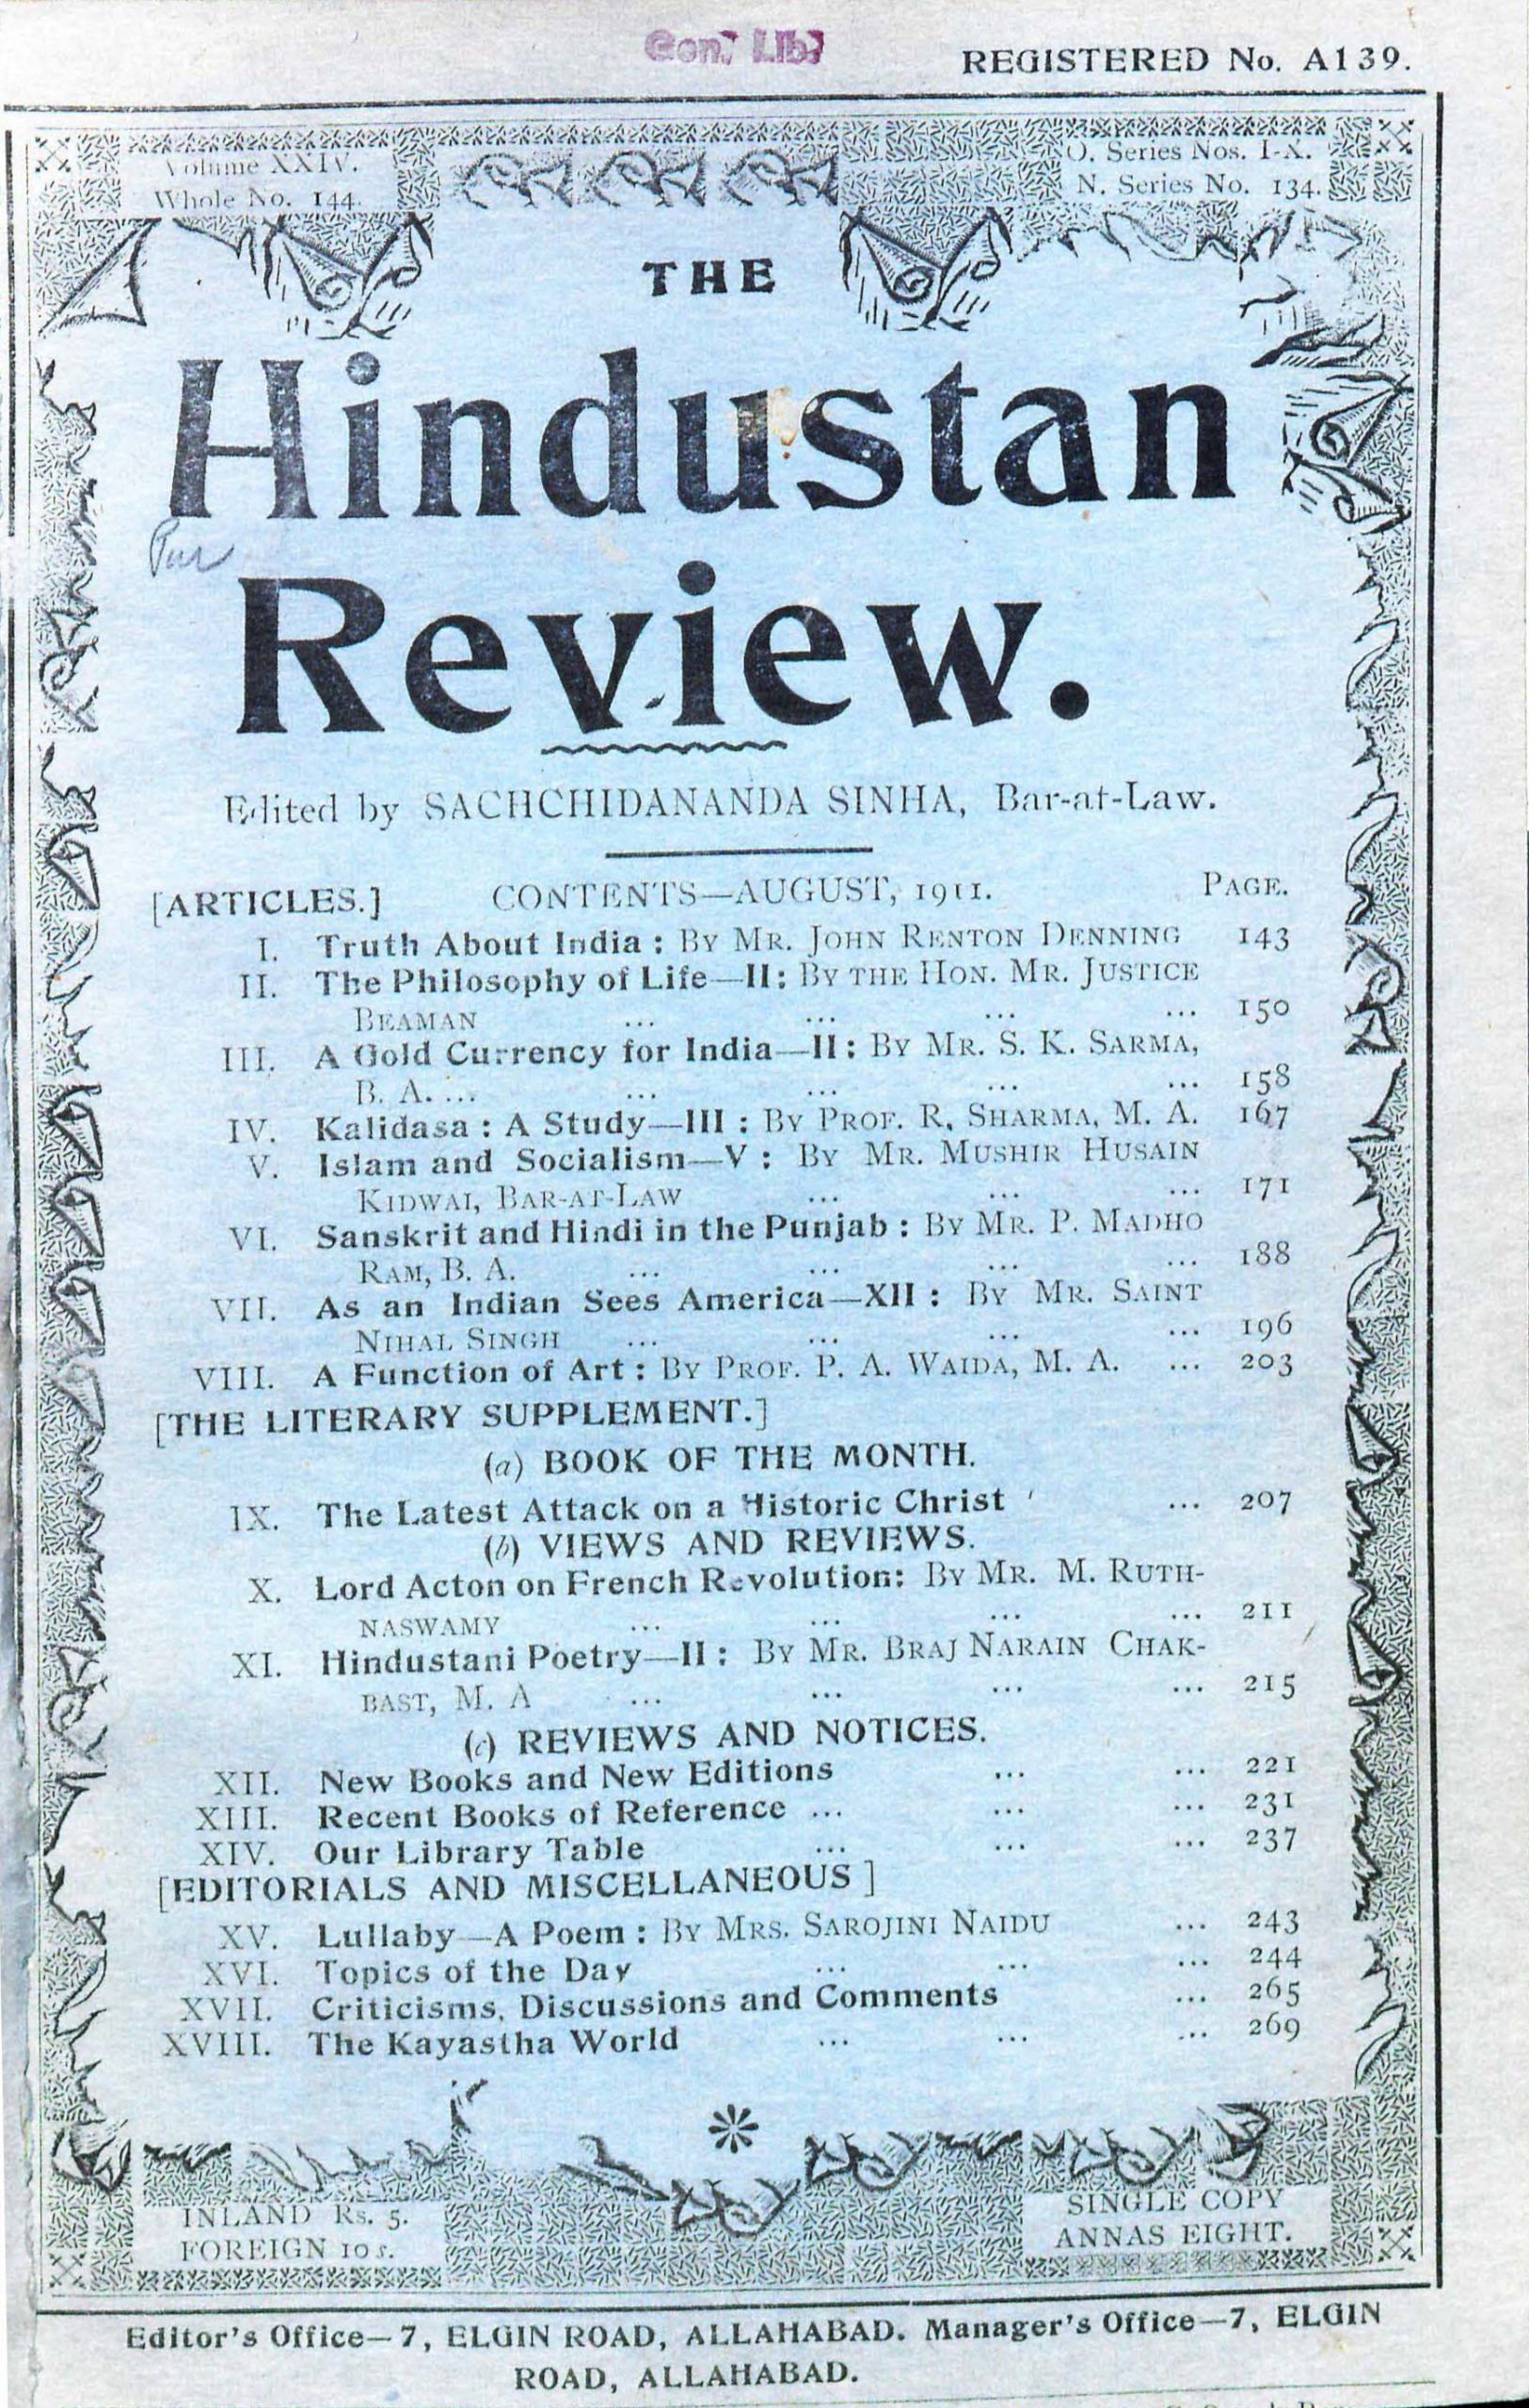 Hindustan Review, Vol 24, 1911 (August)